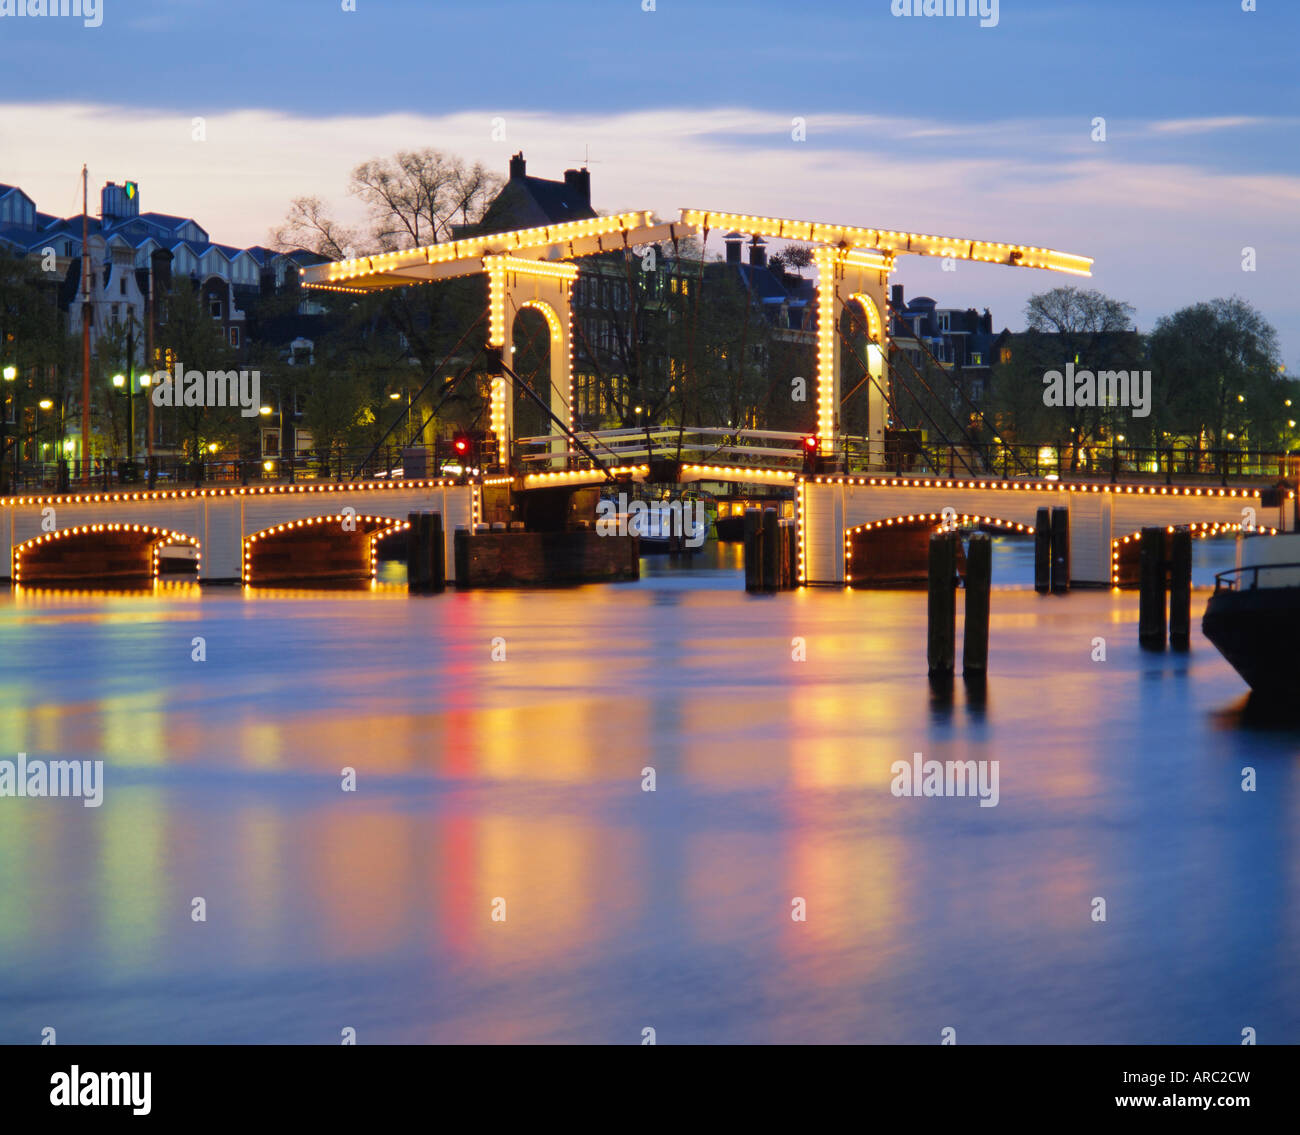 Magere Brug, the Skinny Bridge, Amsterdam, Netherlands Stock Photo - Alamy